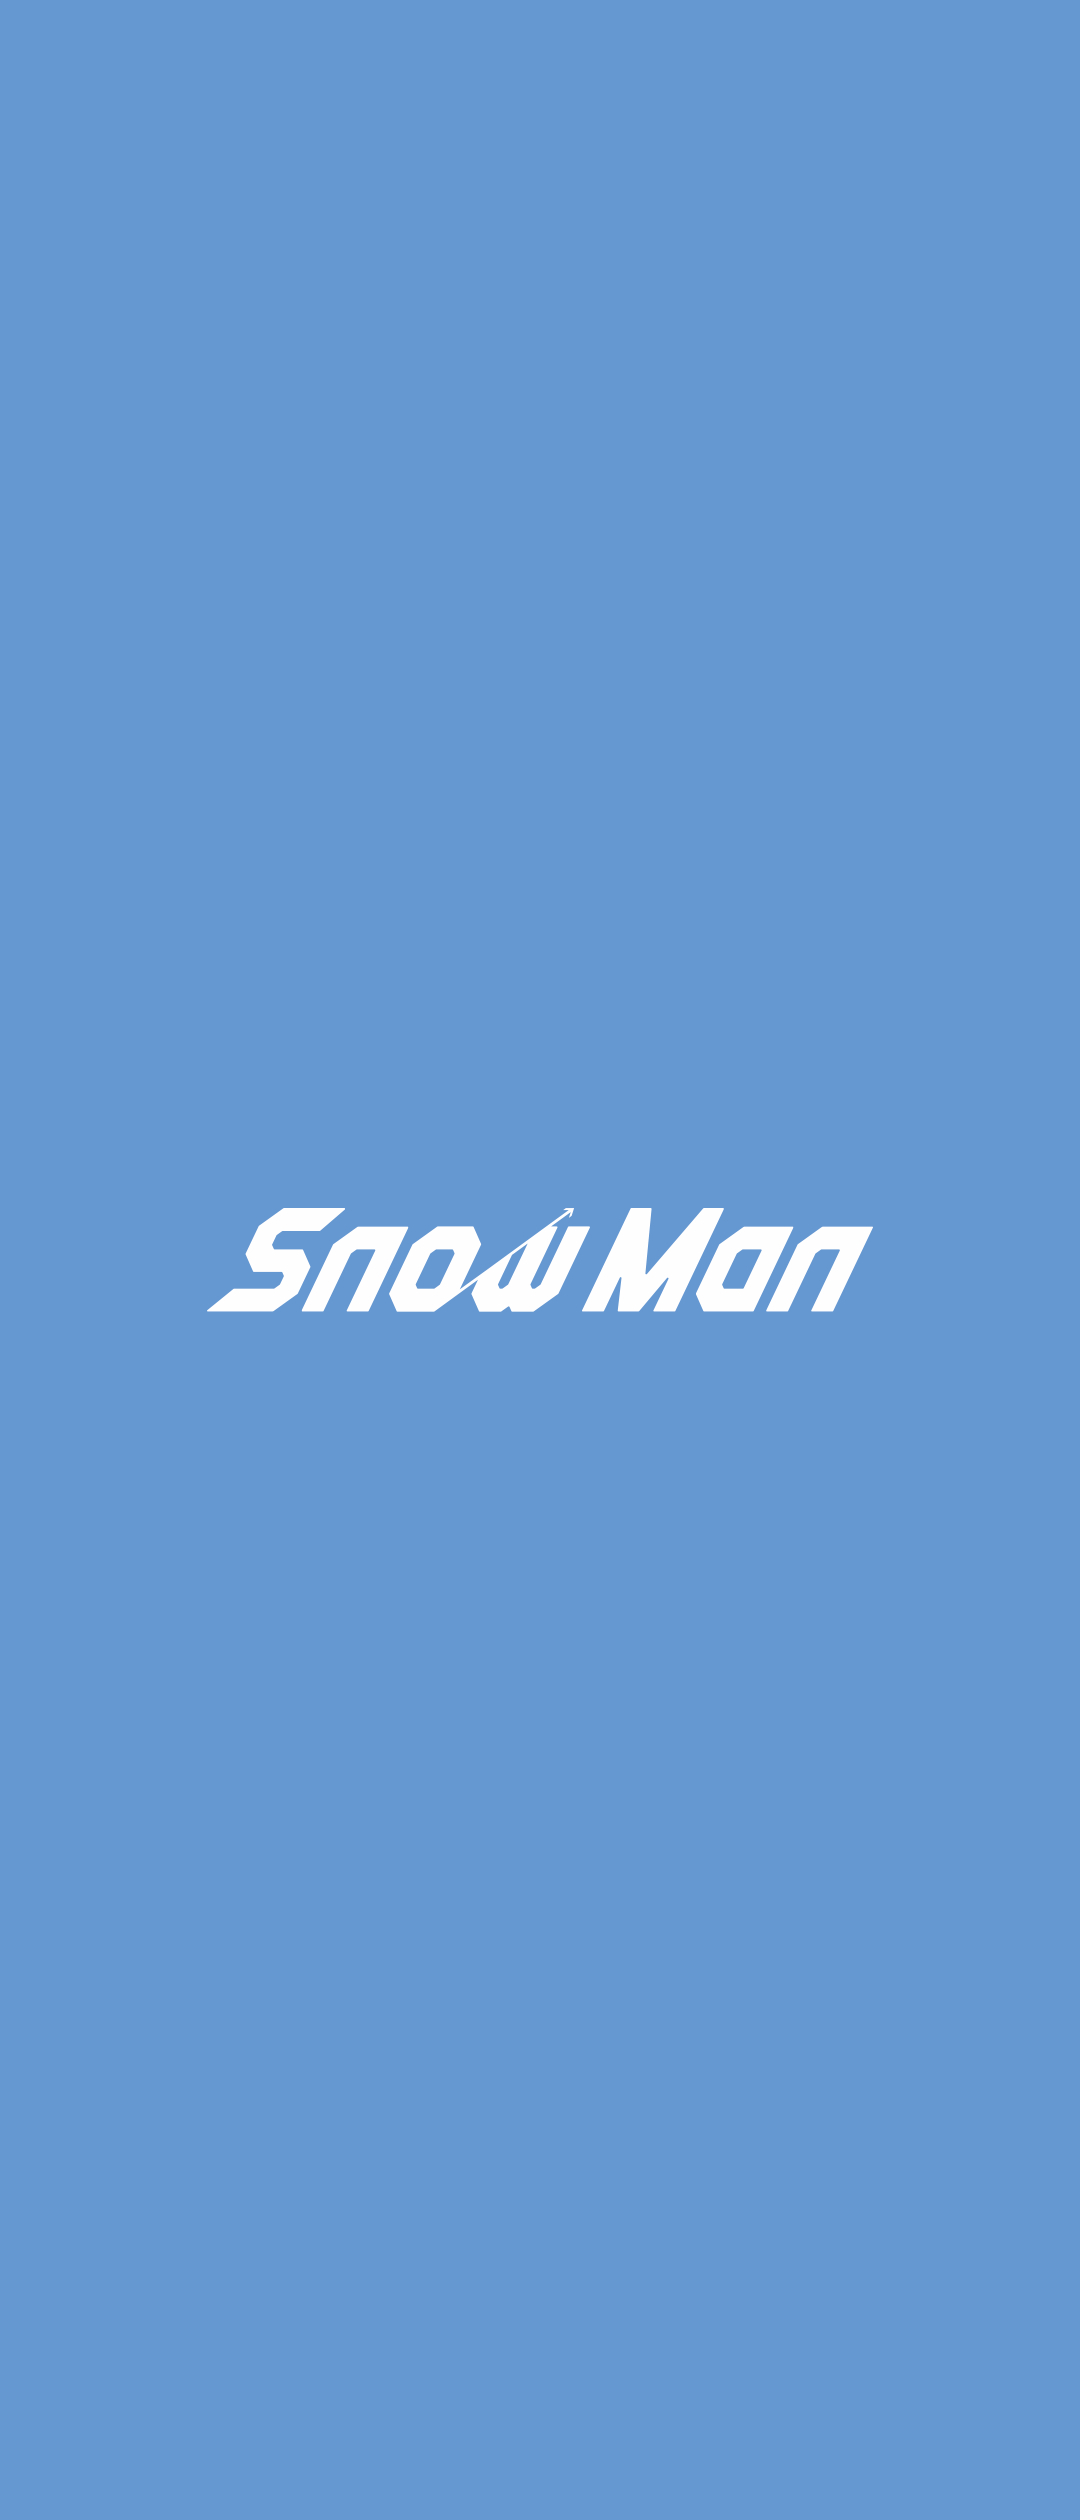 Snow Manのロゴ Xperia 10 Ii 壁紙 待ち受け Sumaran